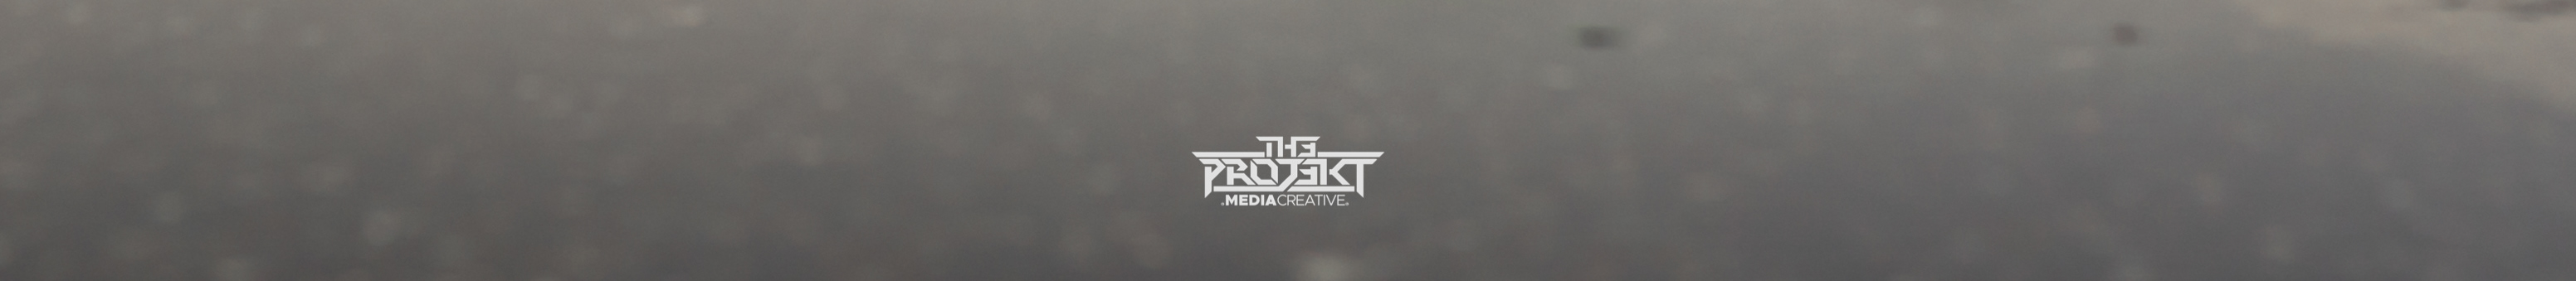 TP Media's profile banner